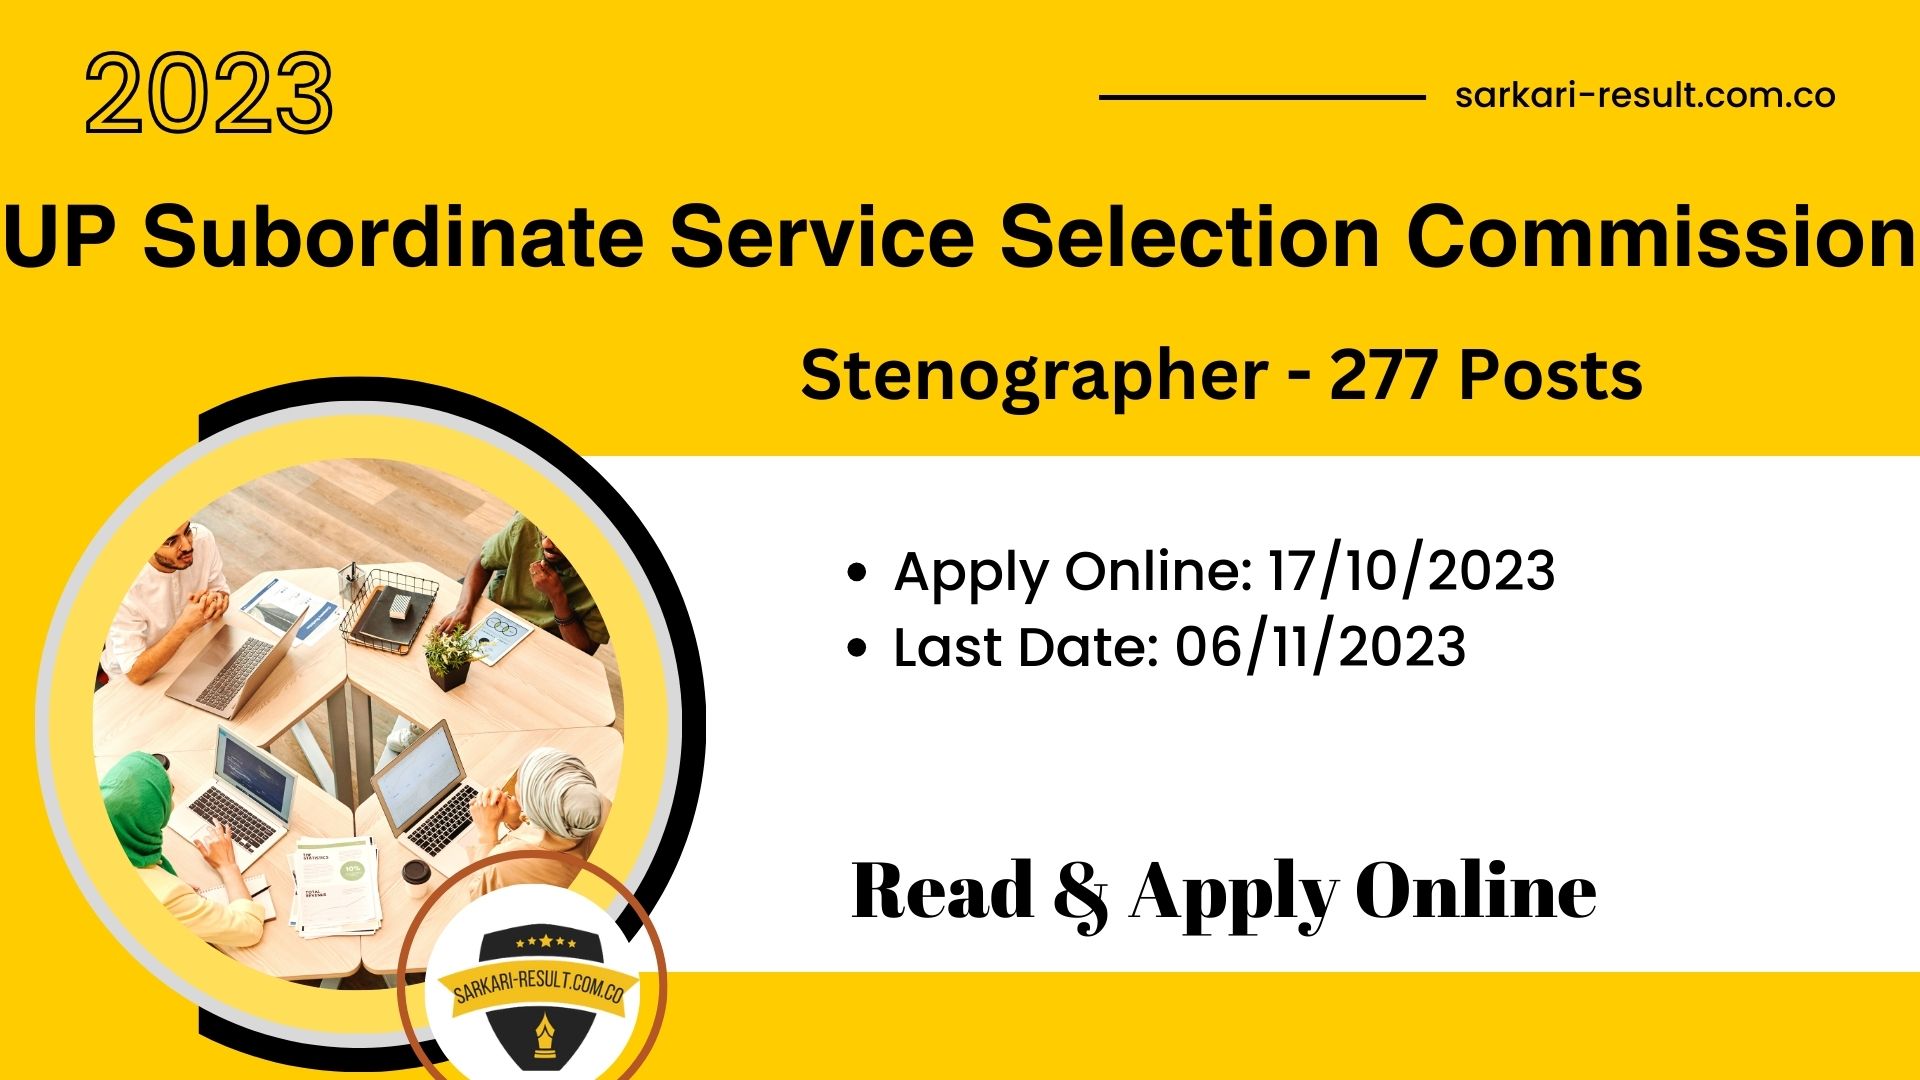 Apply Online UPSSSC Stenographer Recruitment 2023 for 277 Post